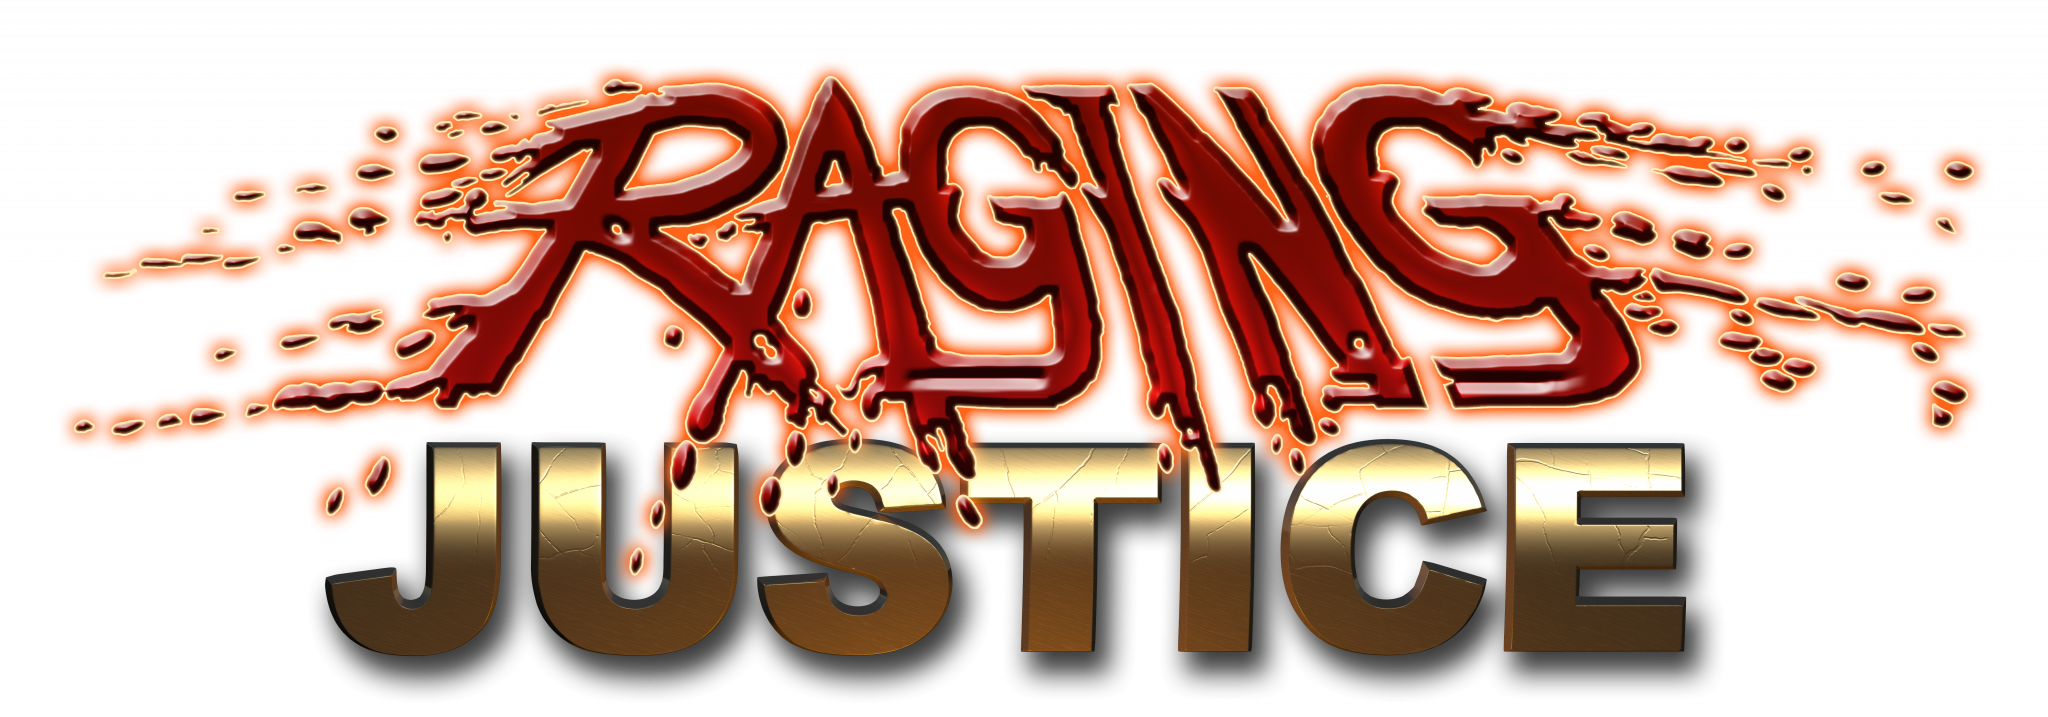 Justice на пк. Raging Justice. Логотип Rage. Inscription логотип игры. Картинки с названием рейдж.